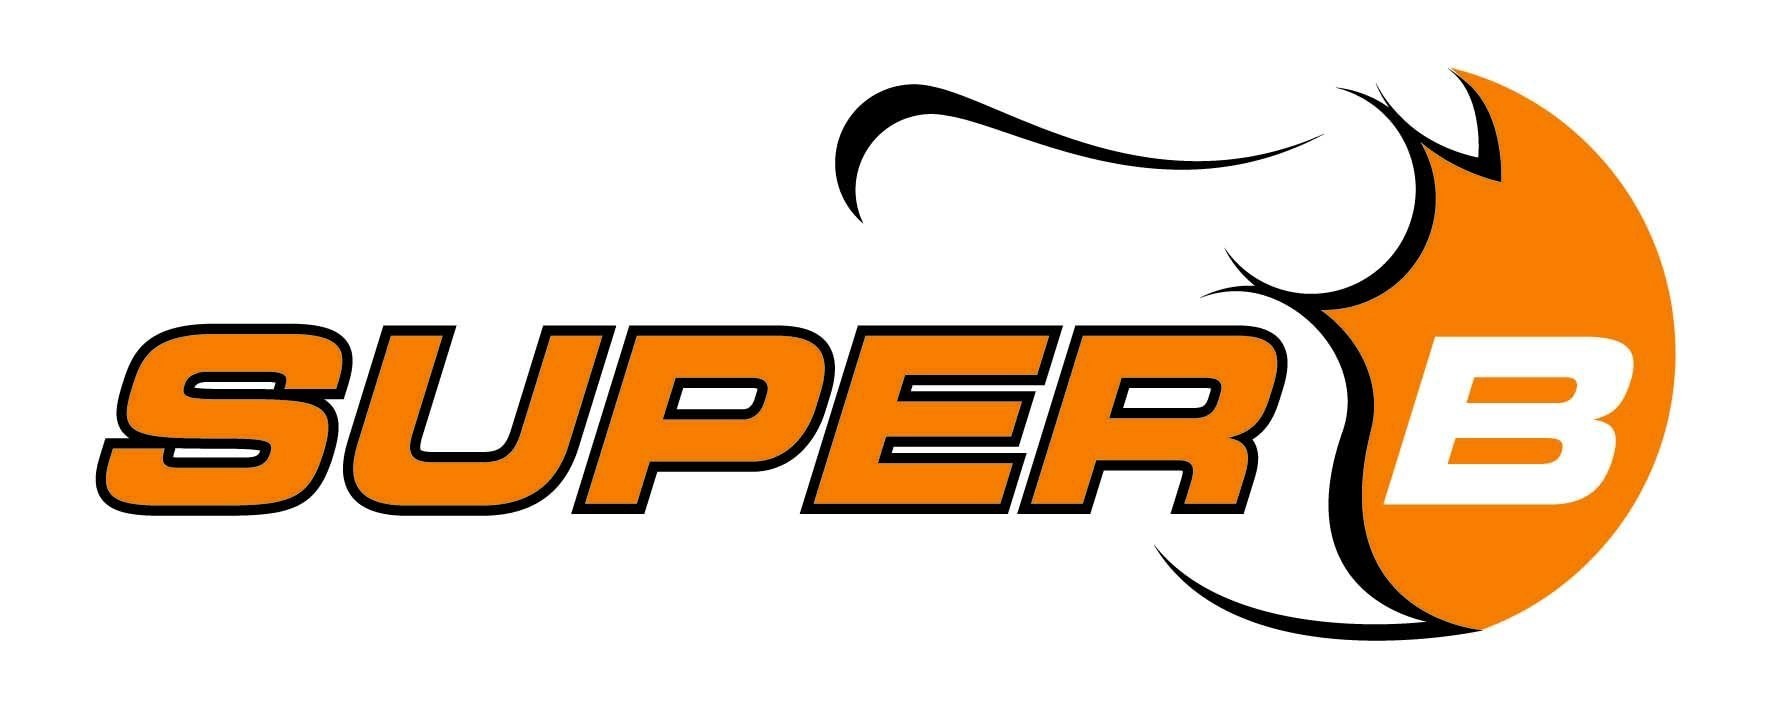 Super-B